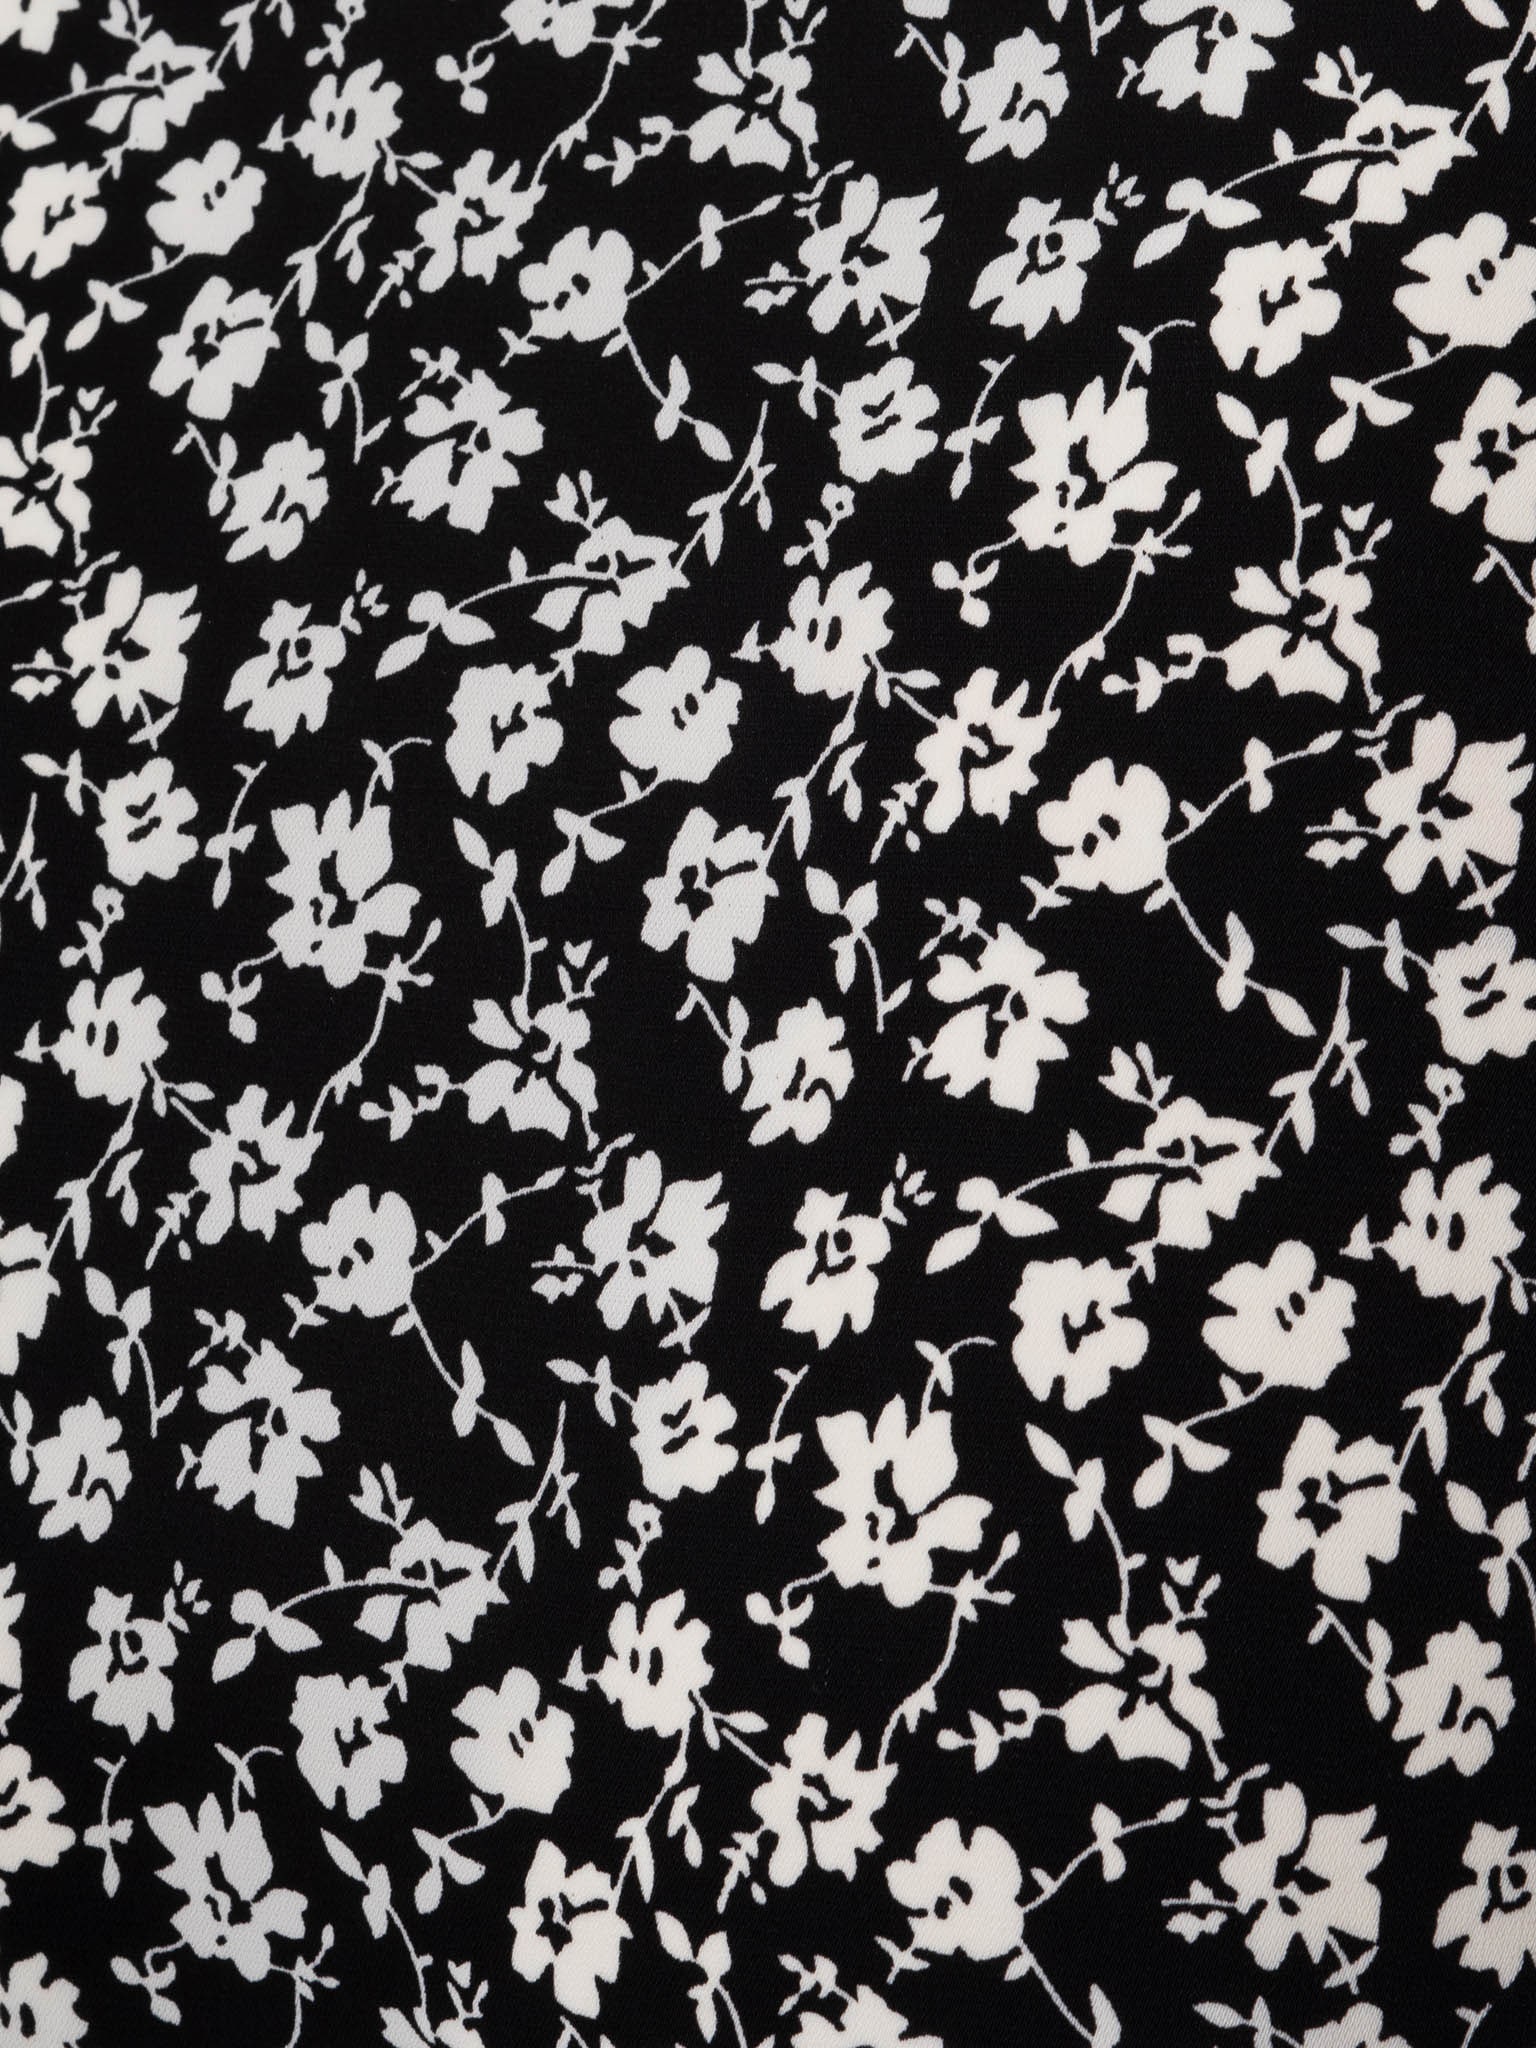 Floral-printed midi skirt